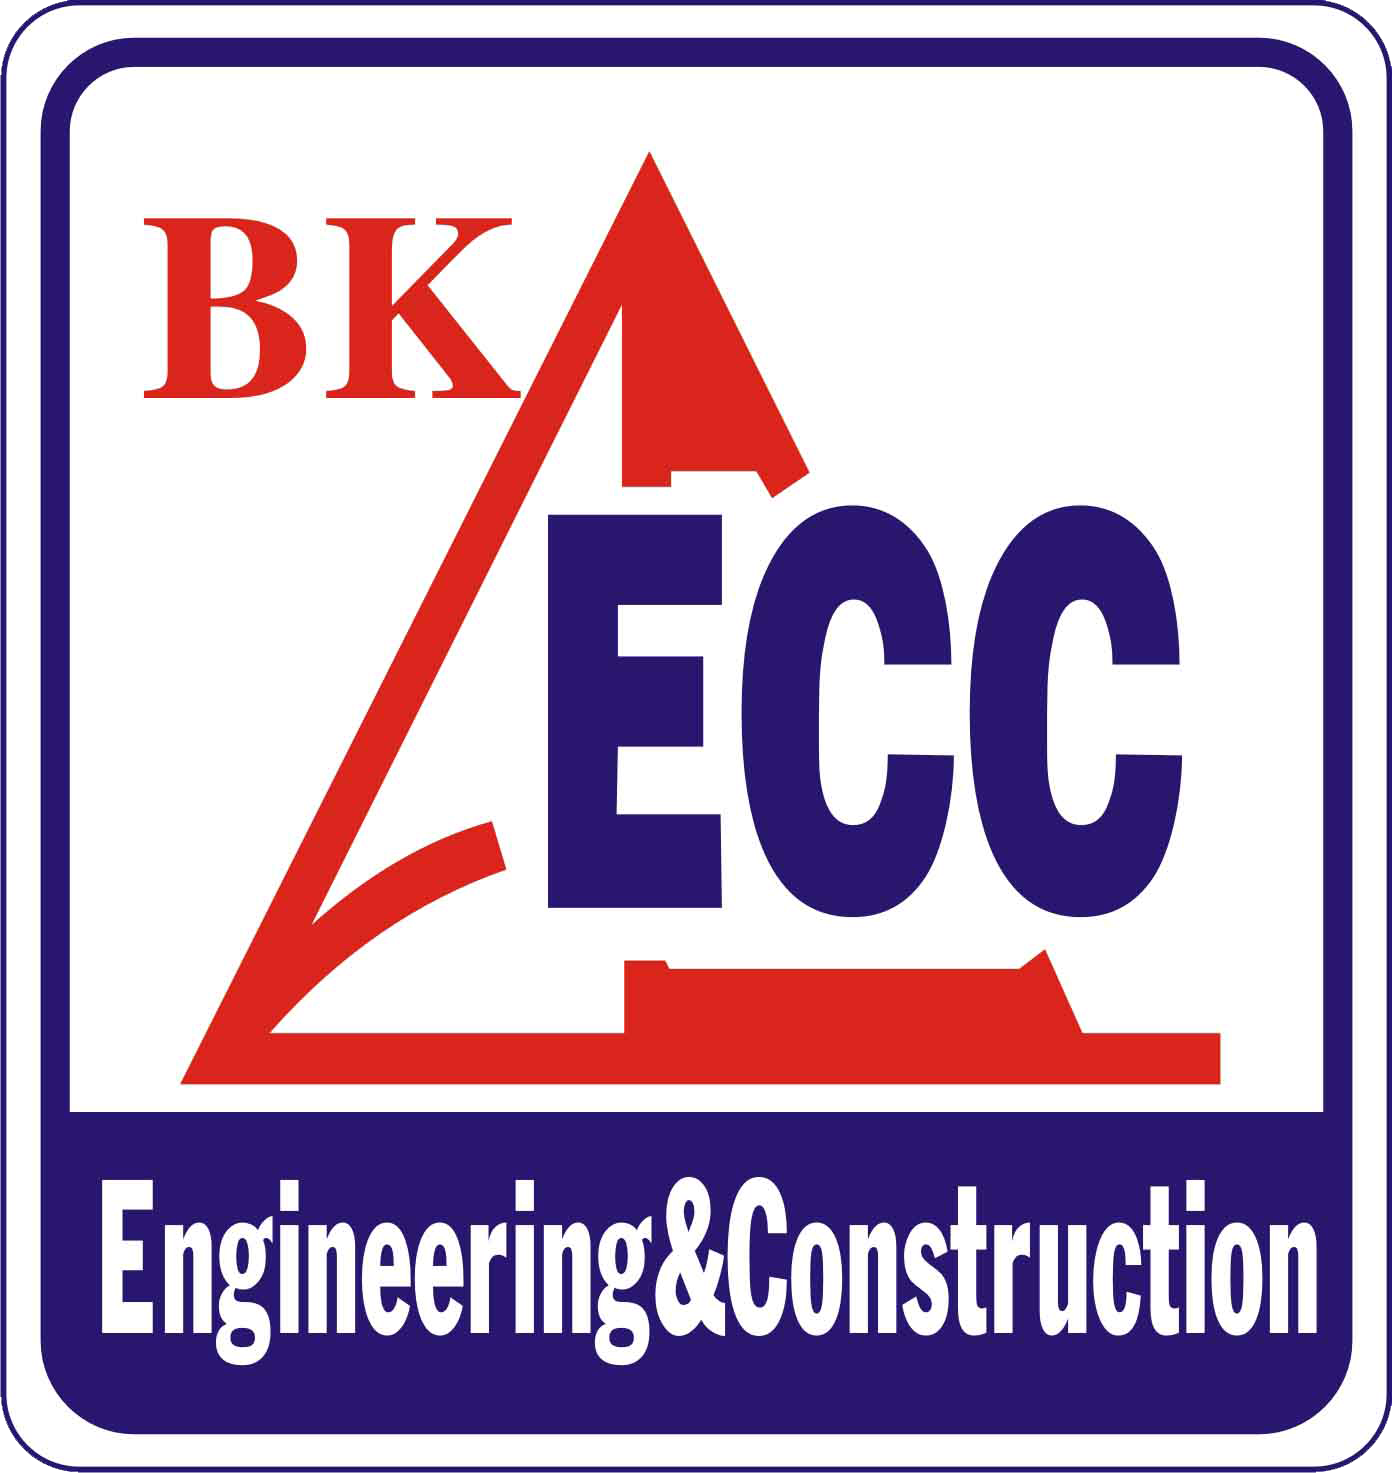 BK-ECC